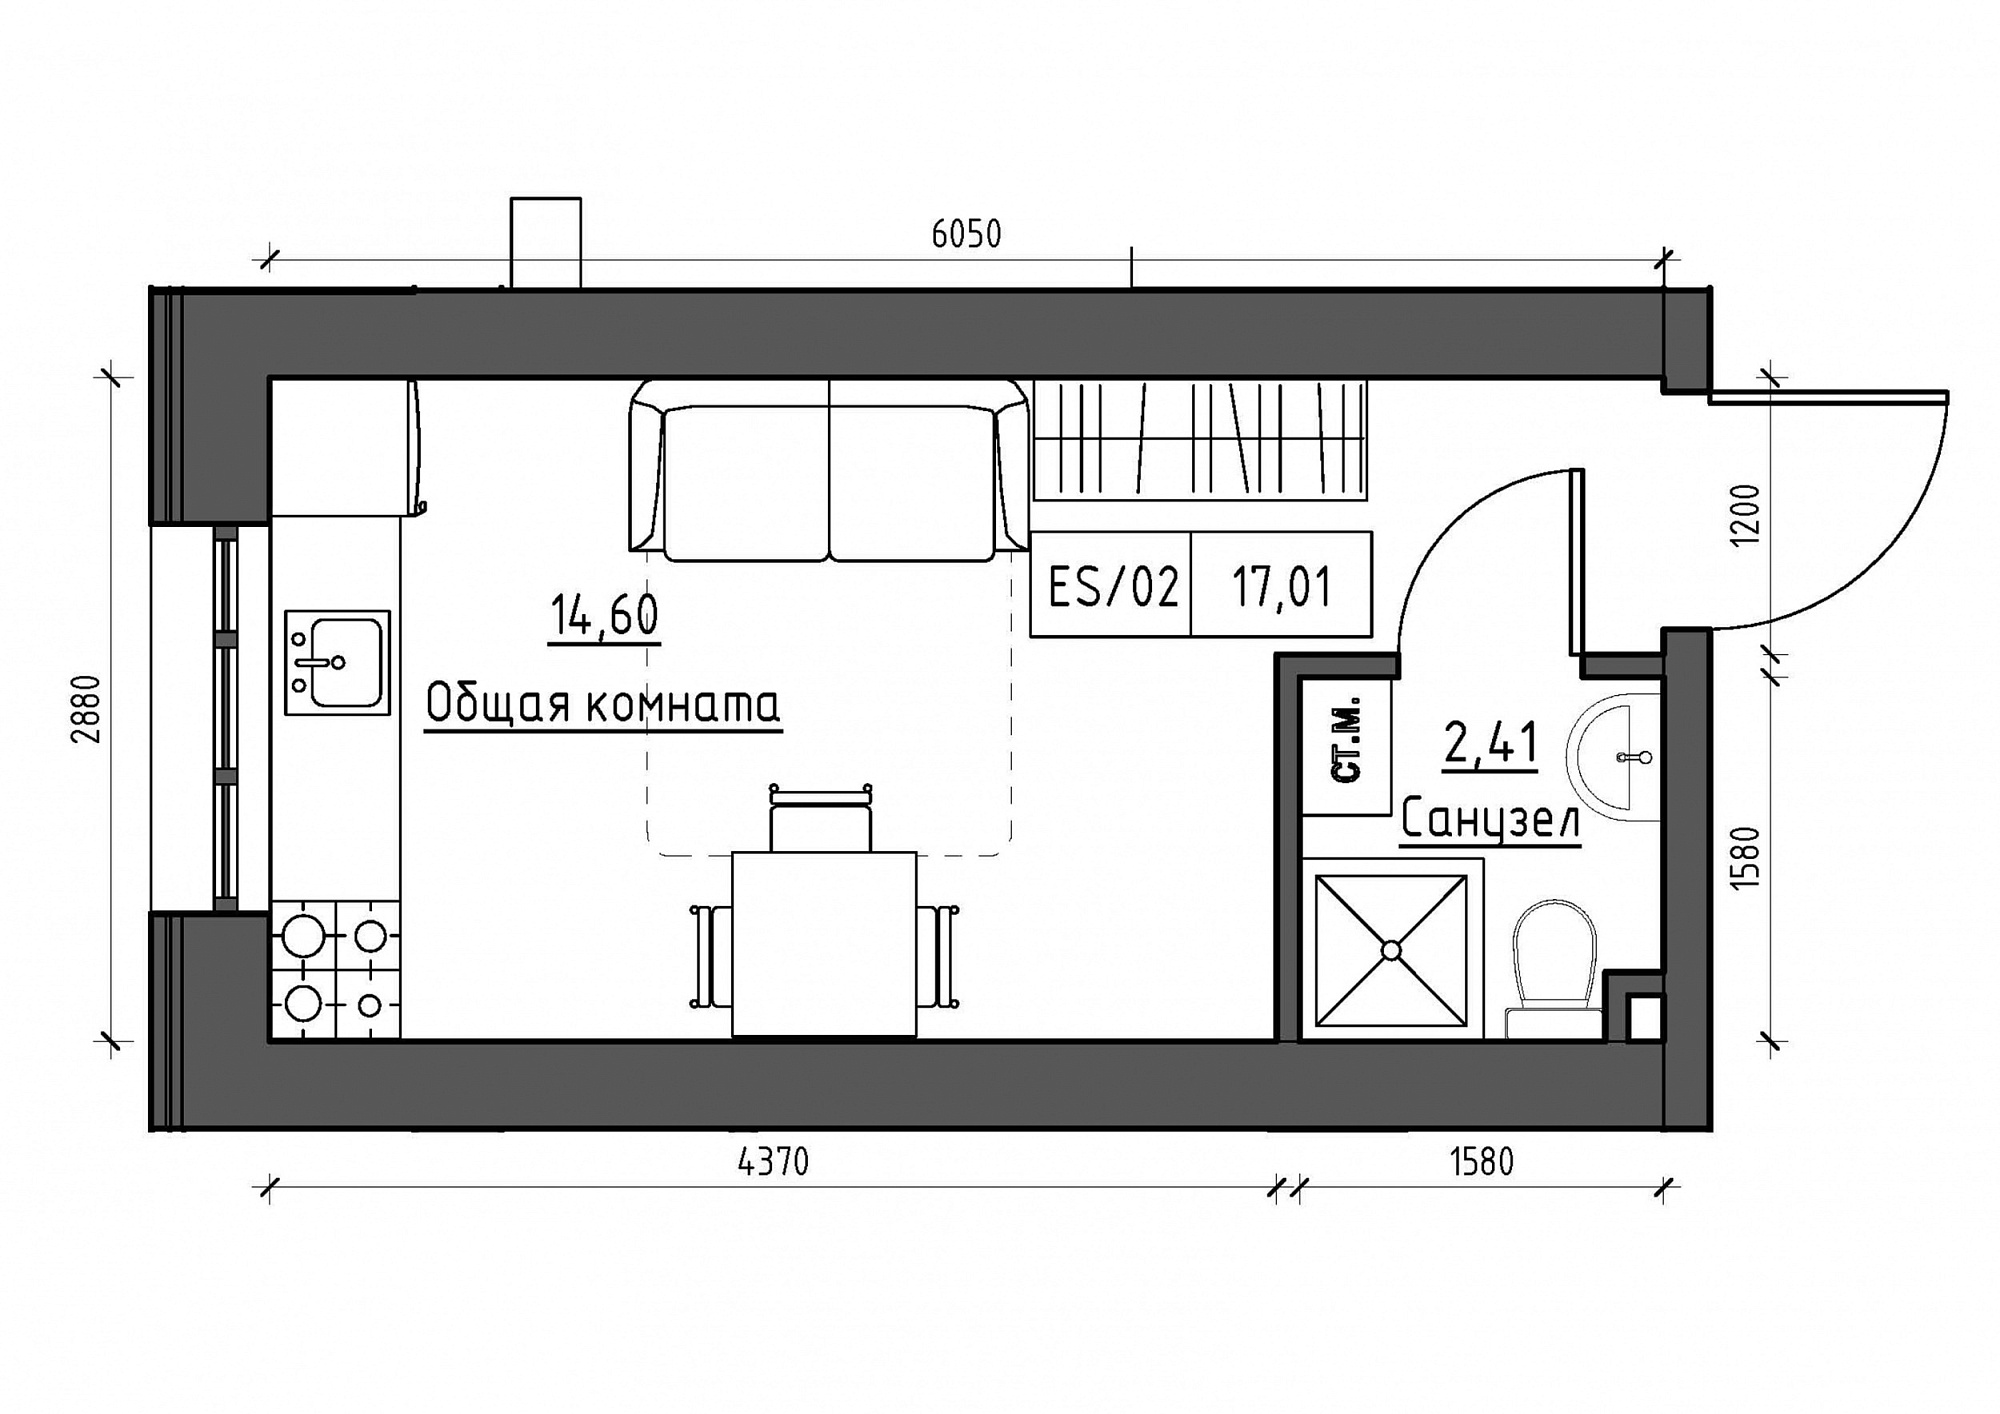 Planning Smart flats area 17.01m2, KS-011-01/0002.